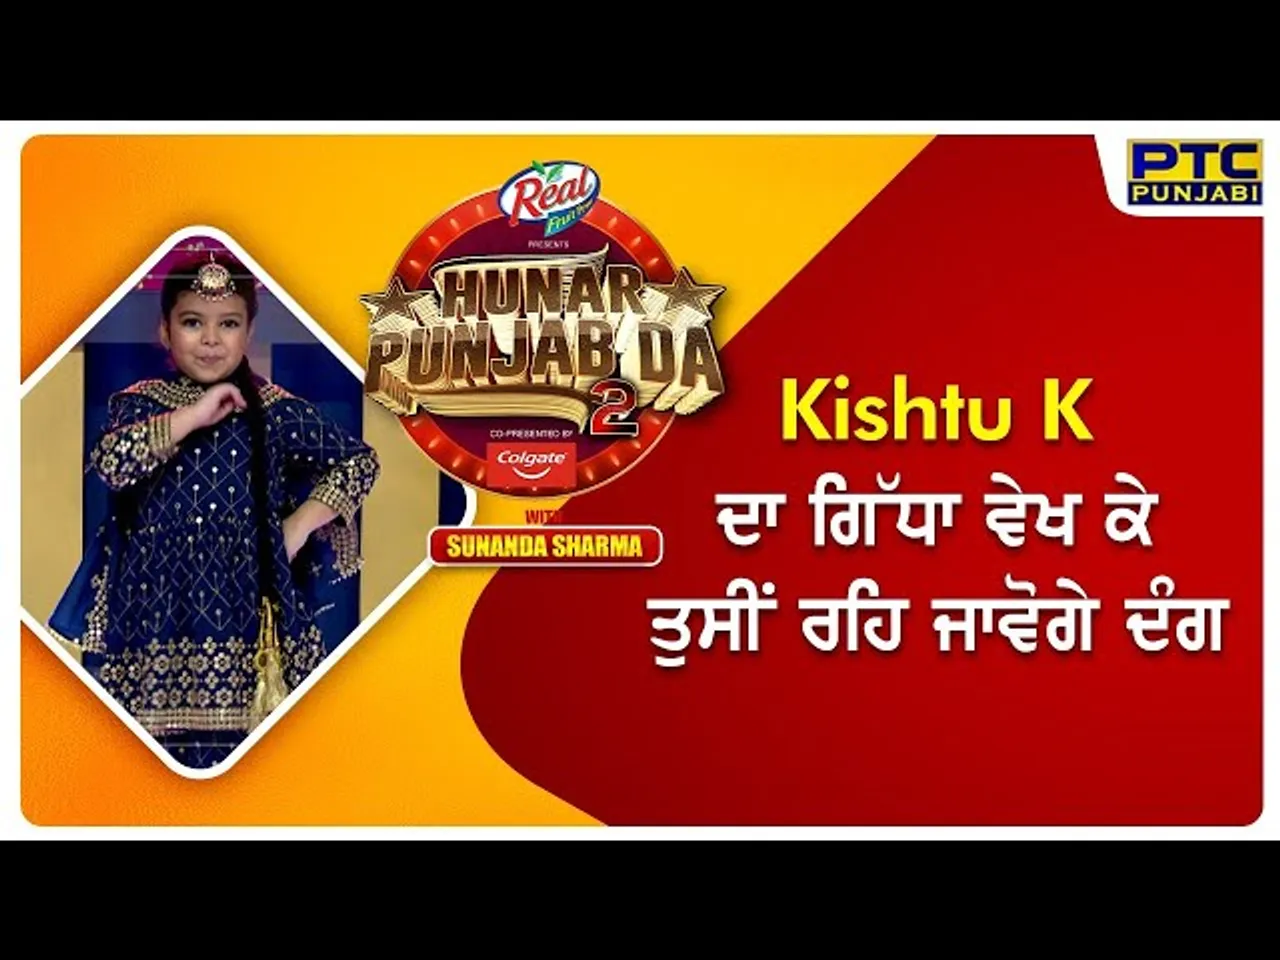 Hunar Punjab Da Season- 2 | Kishtu K ਦਾ ਗਿੱਧਾ ਵੇਖ ਕੇ ਤੁਸੀਂ ਰਹਿ ਜਾਵੋਗੇ ਦੰਗ | PTC Punjabi